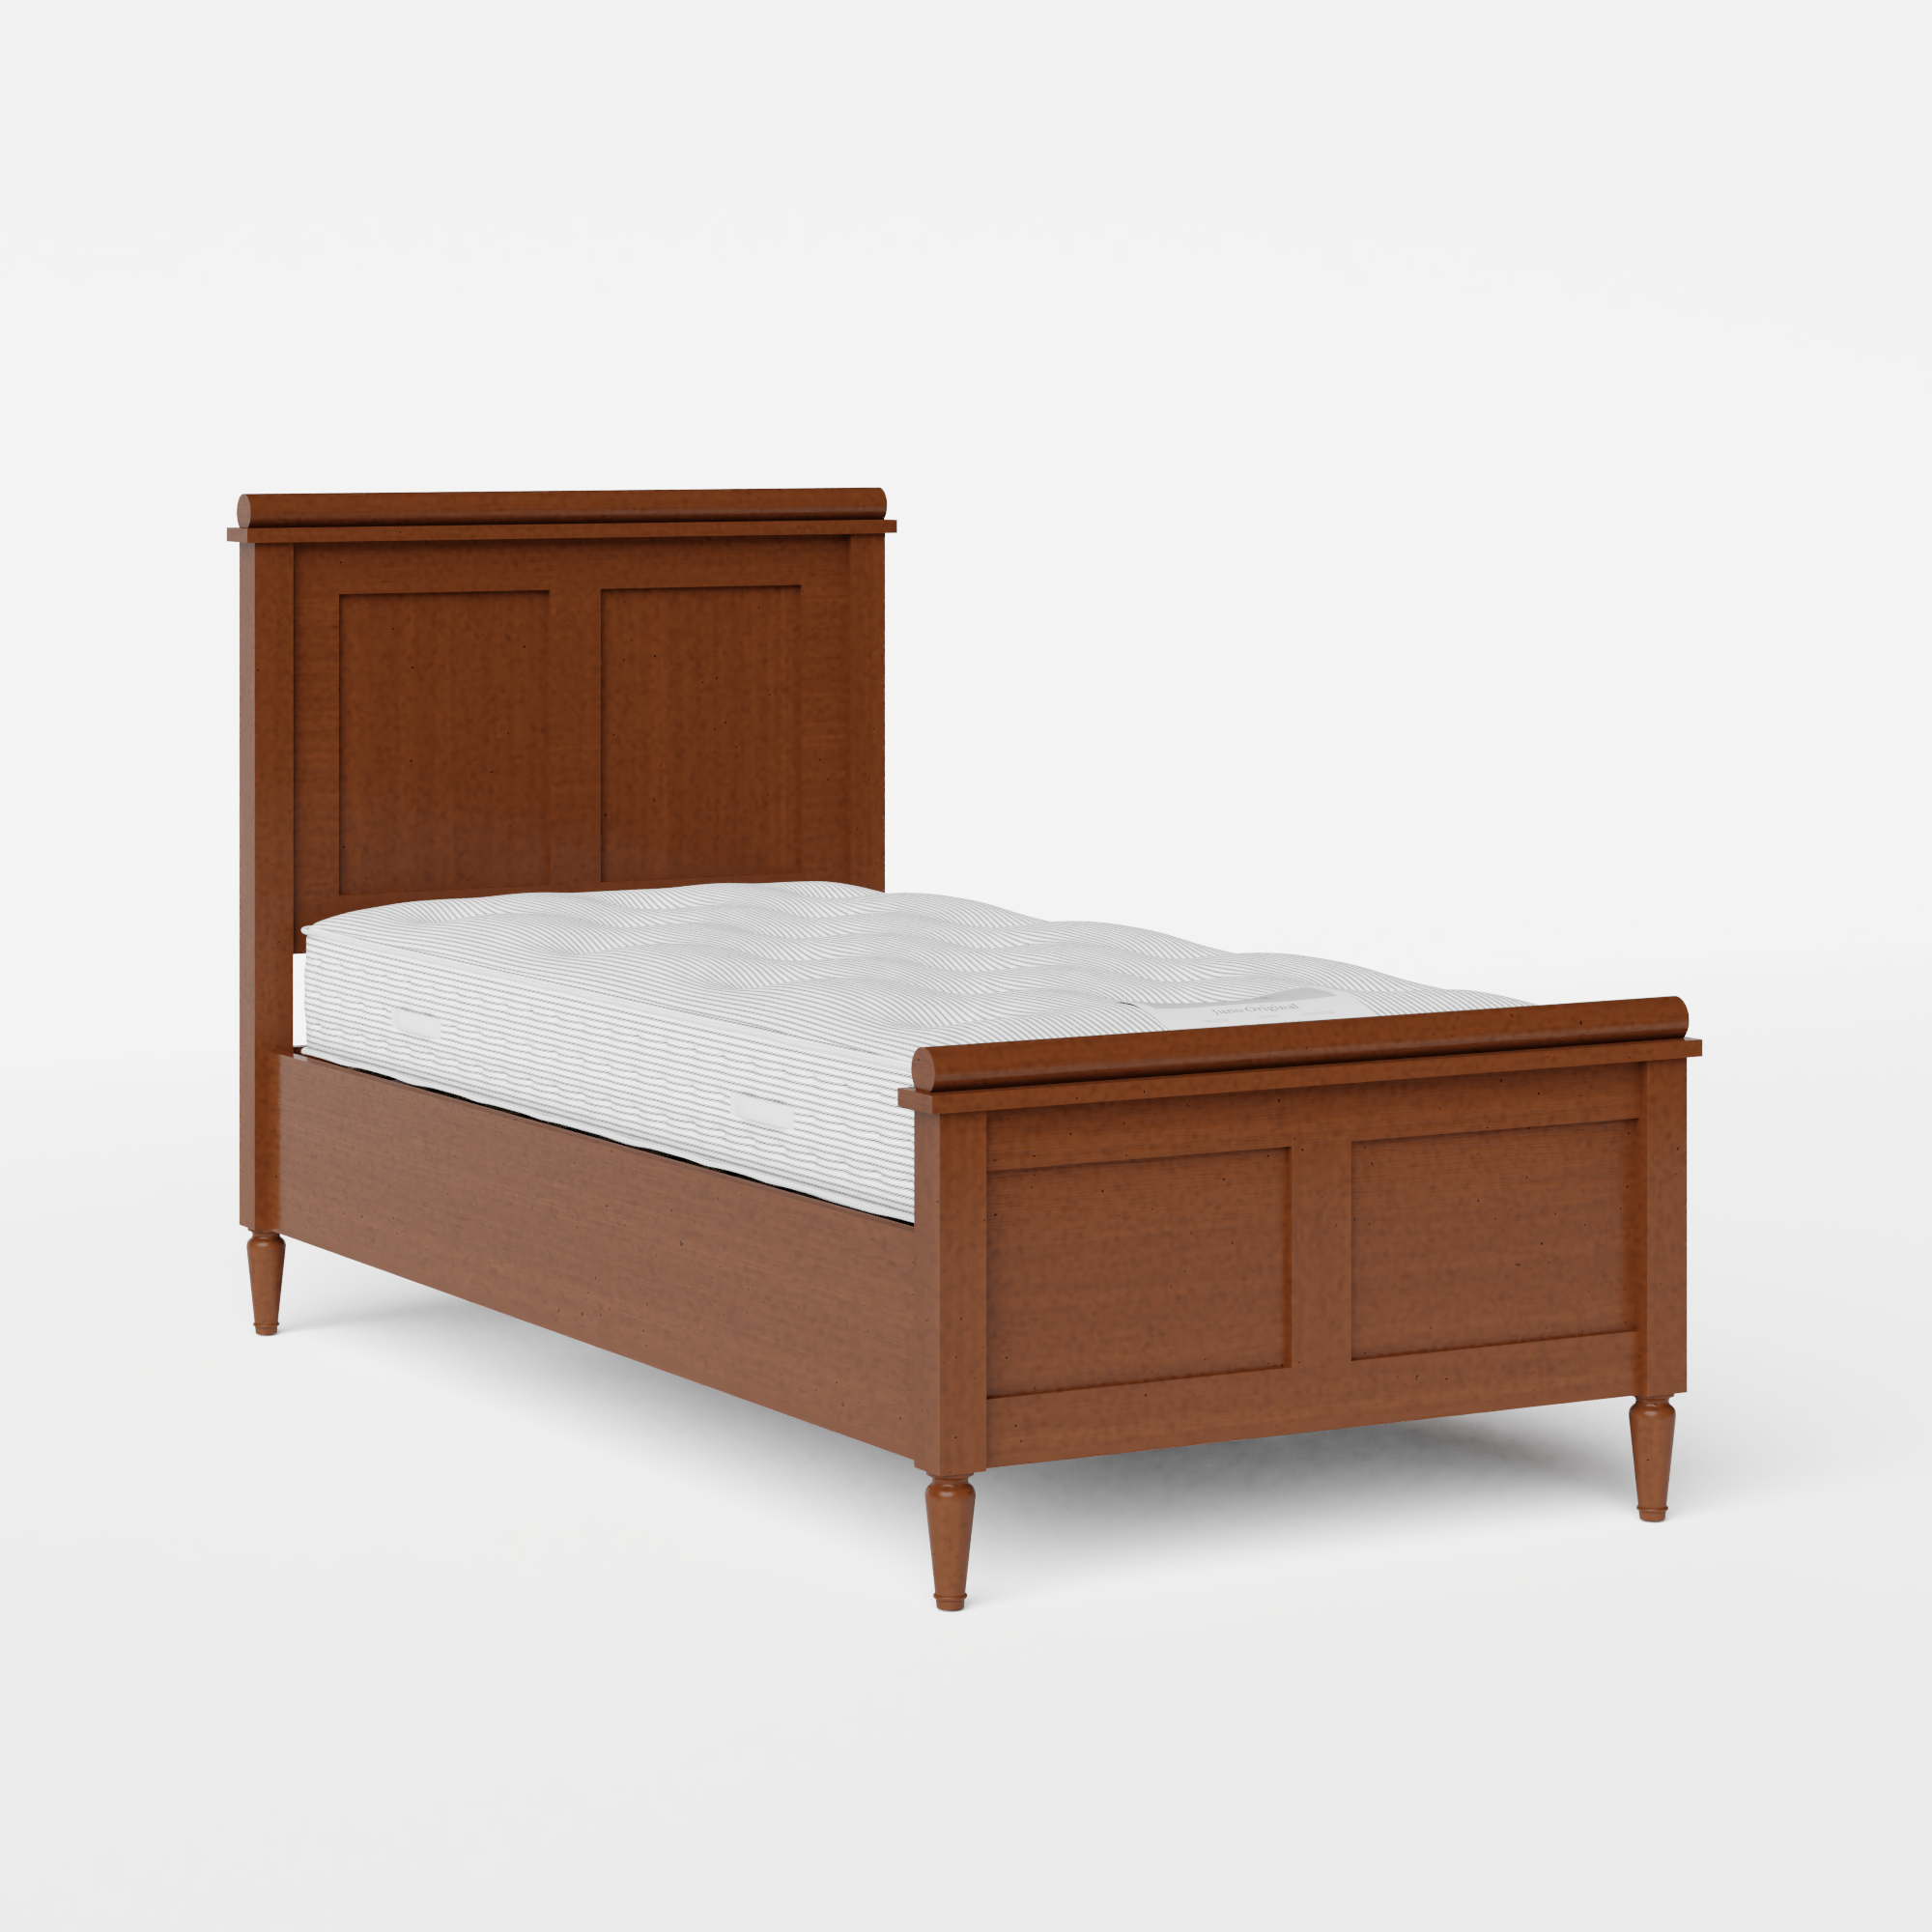 Nocturne single wood bed in dark cherry with Juno mattress